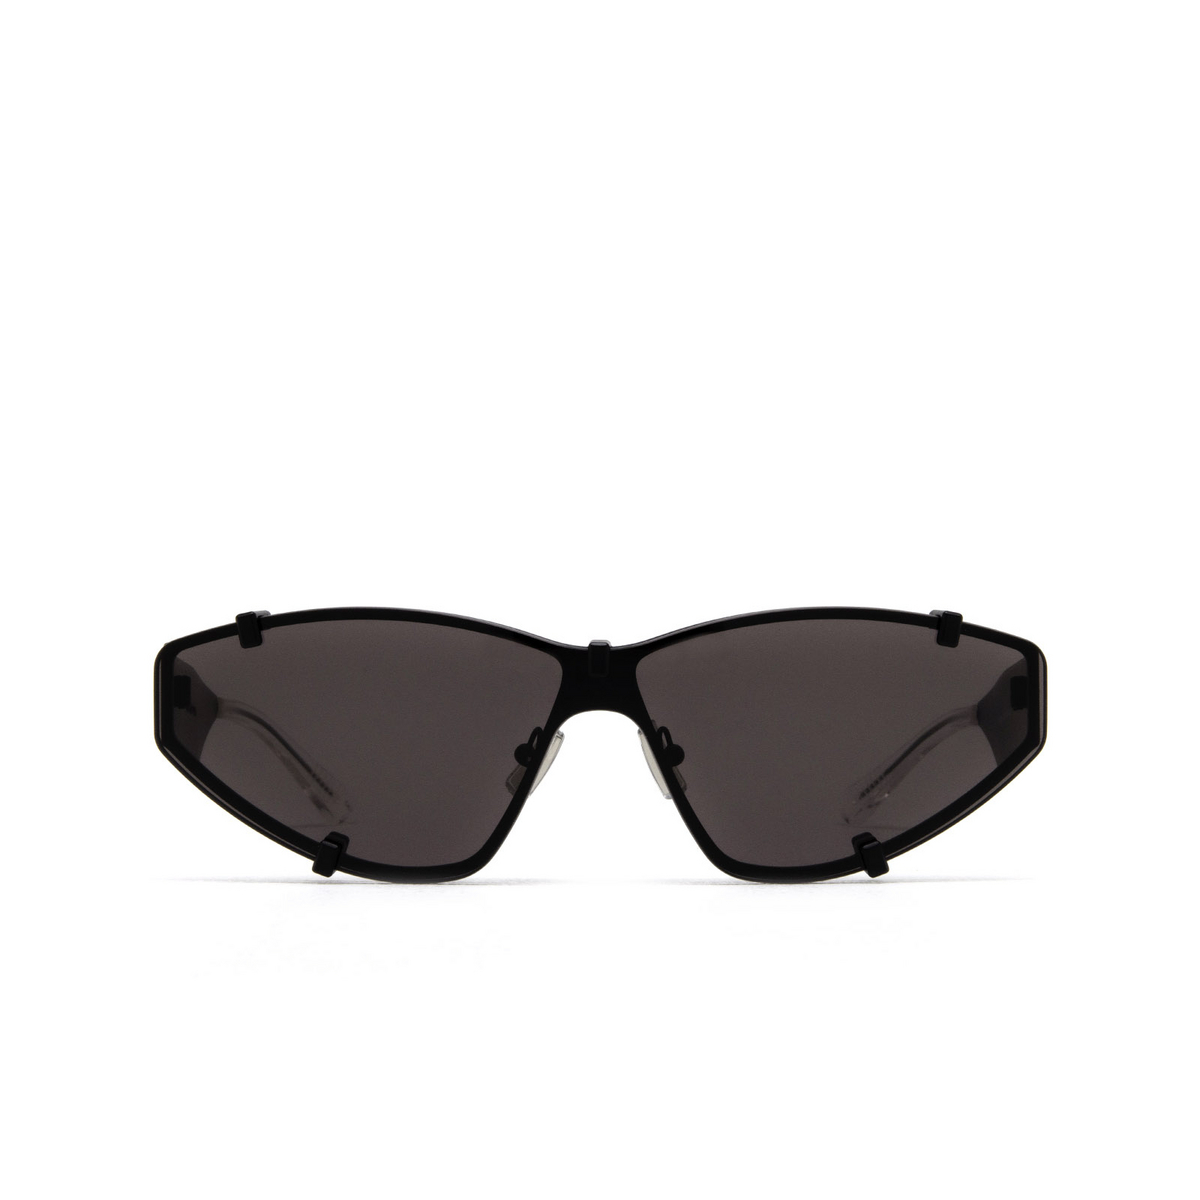 Bottega Veneta® Mask Sunglasses: BV1165S color Black 002 - front view.